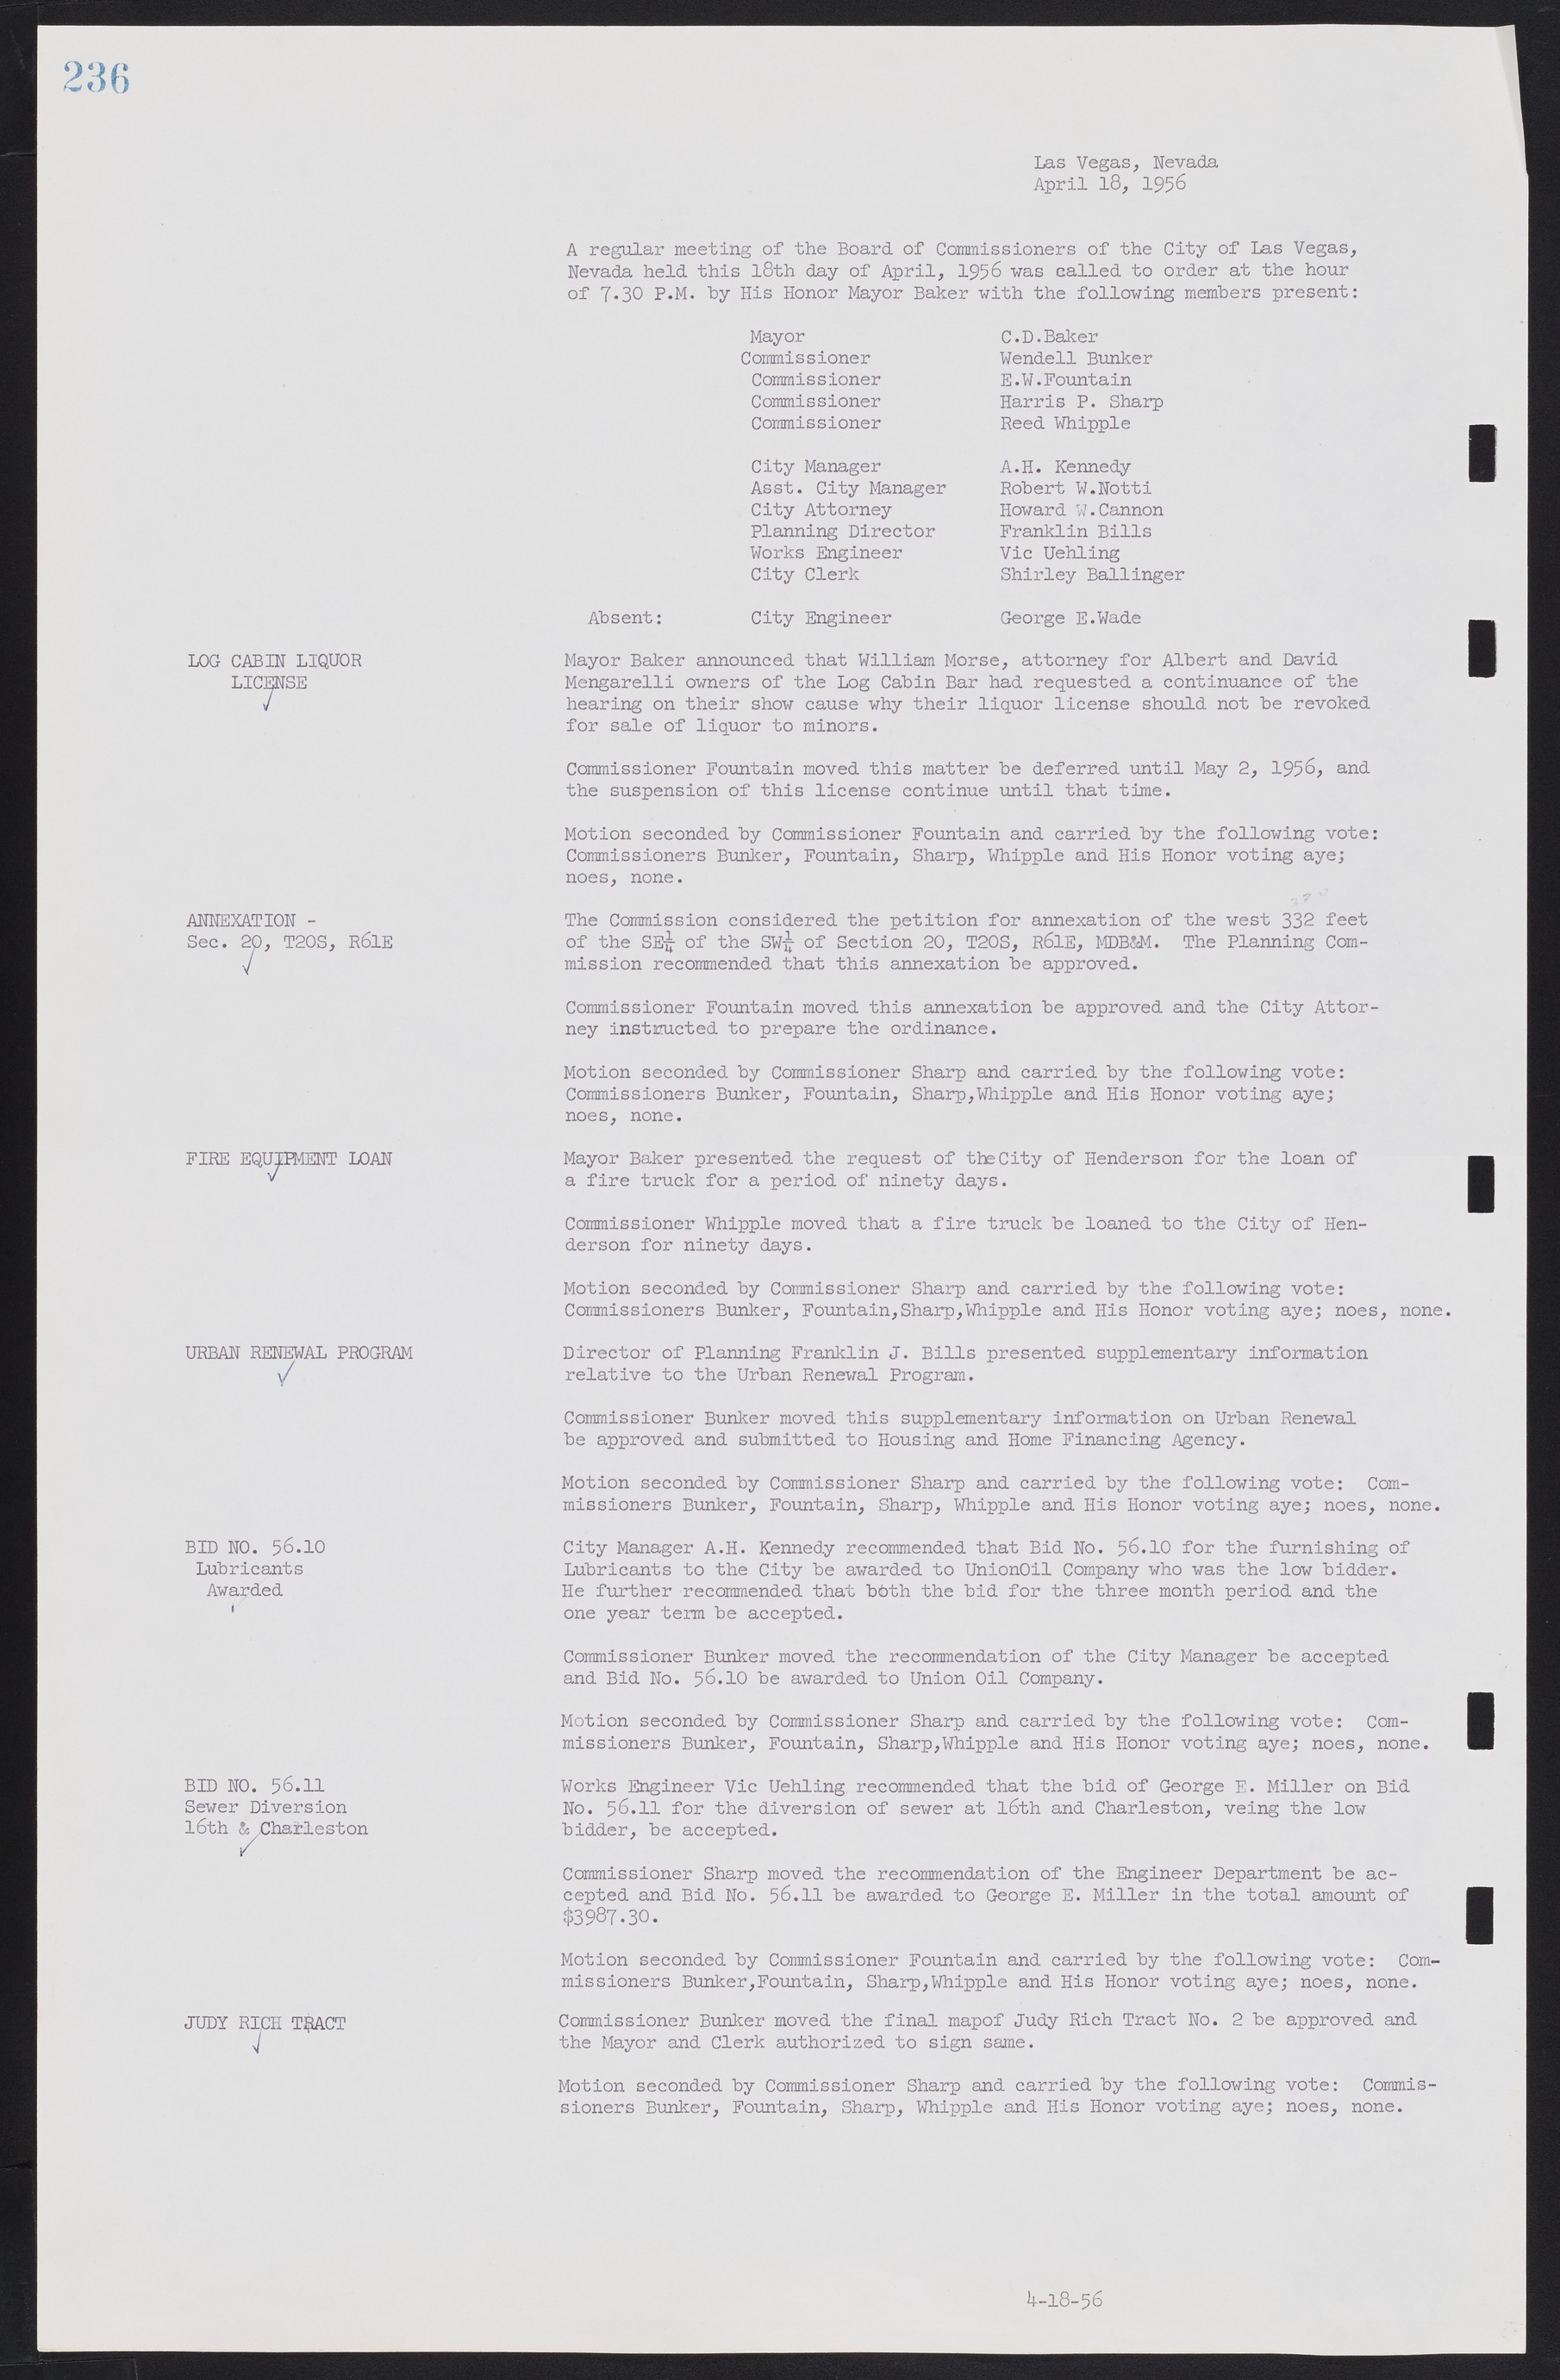 Las Vegas City Commission Minutes, September 21, 1955 to November 20, 1957, lvc000010-254